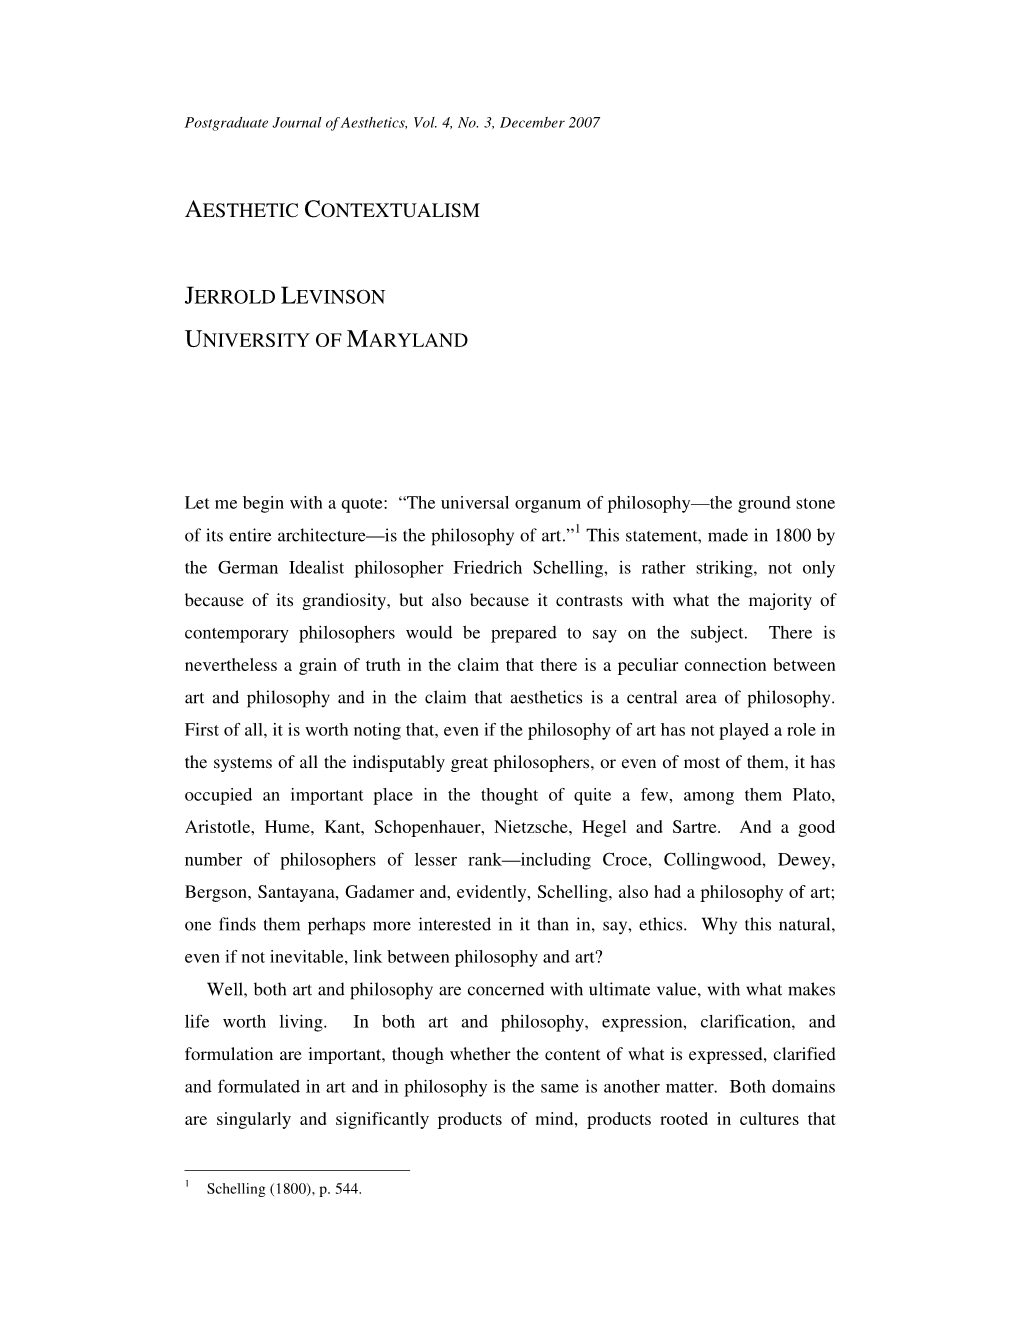 Aesthetic Contextualism Jerrold Levinson University of Maryland